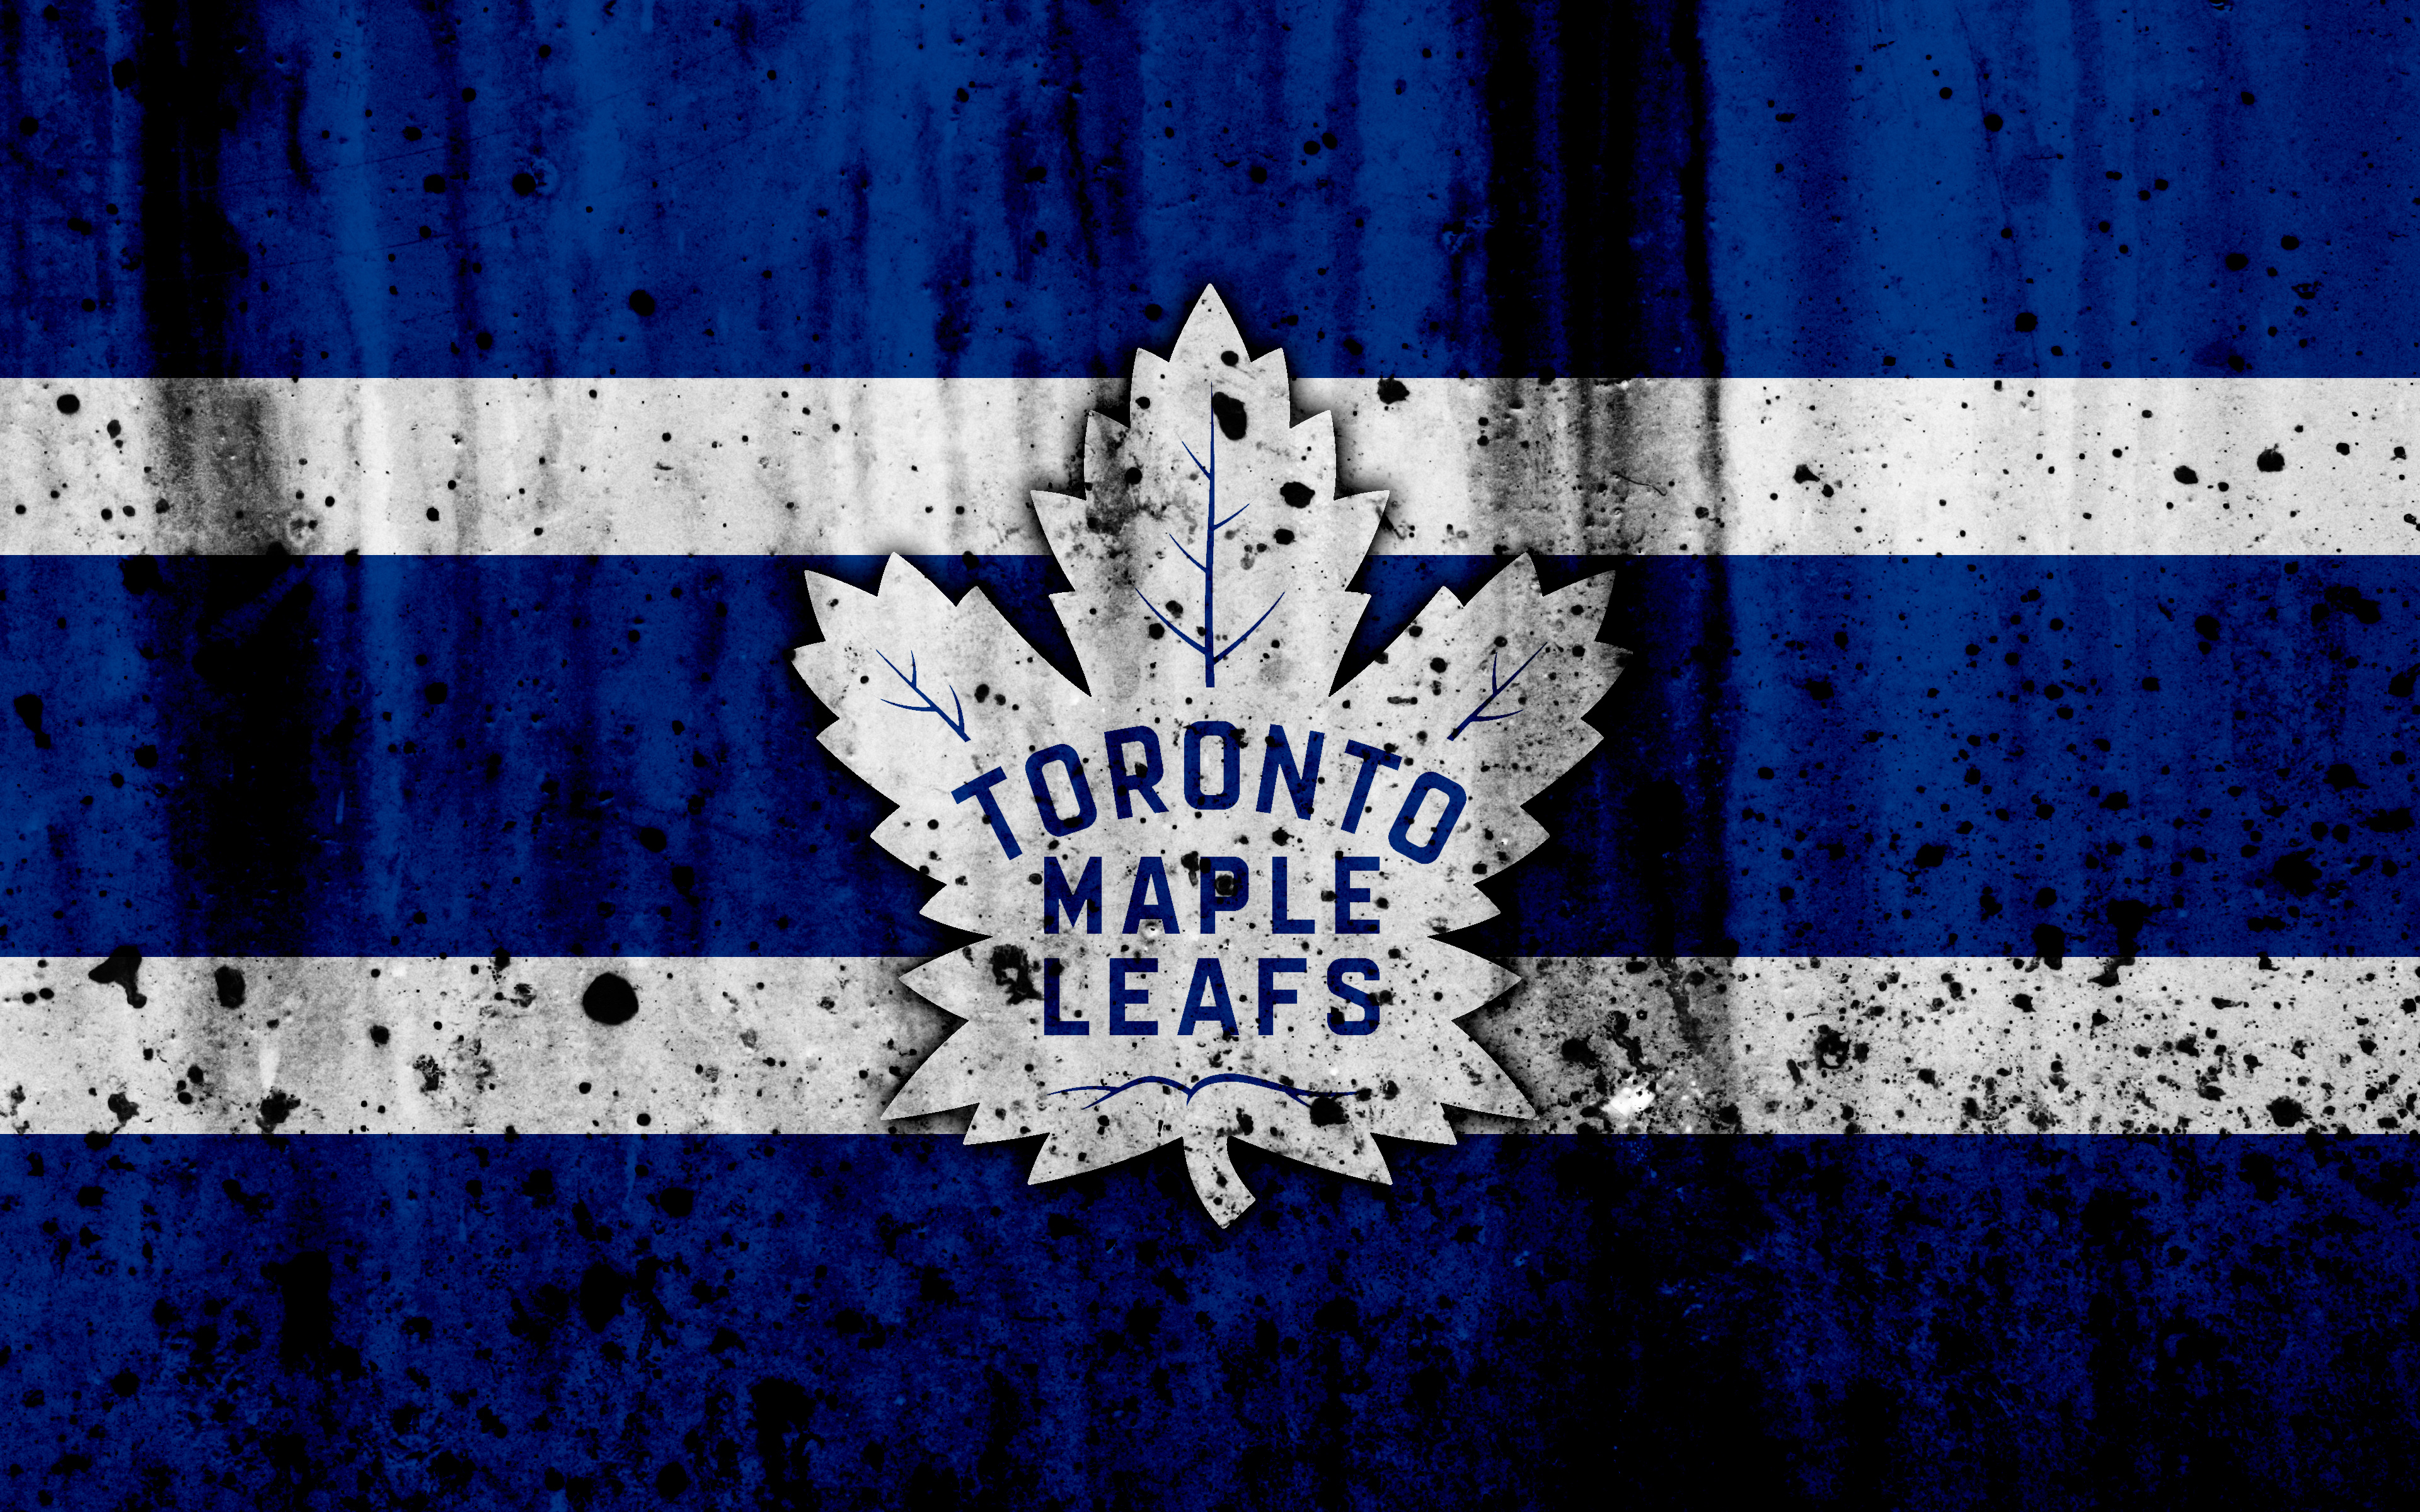 Toronto Maple Leafs | Stephen Clark (sgclark.com)